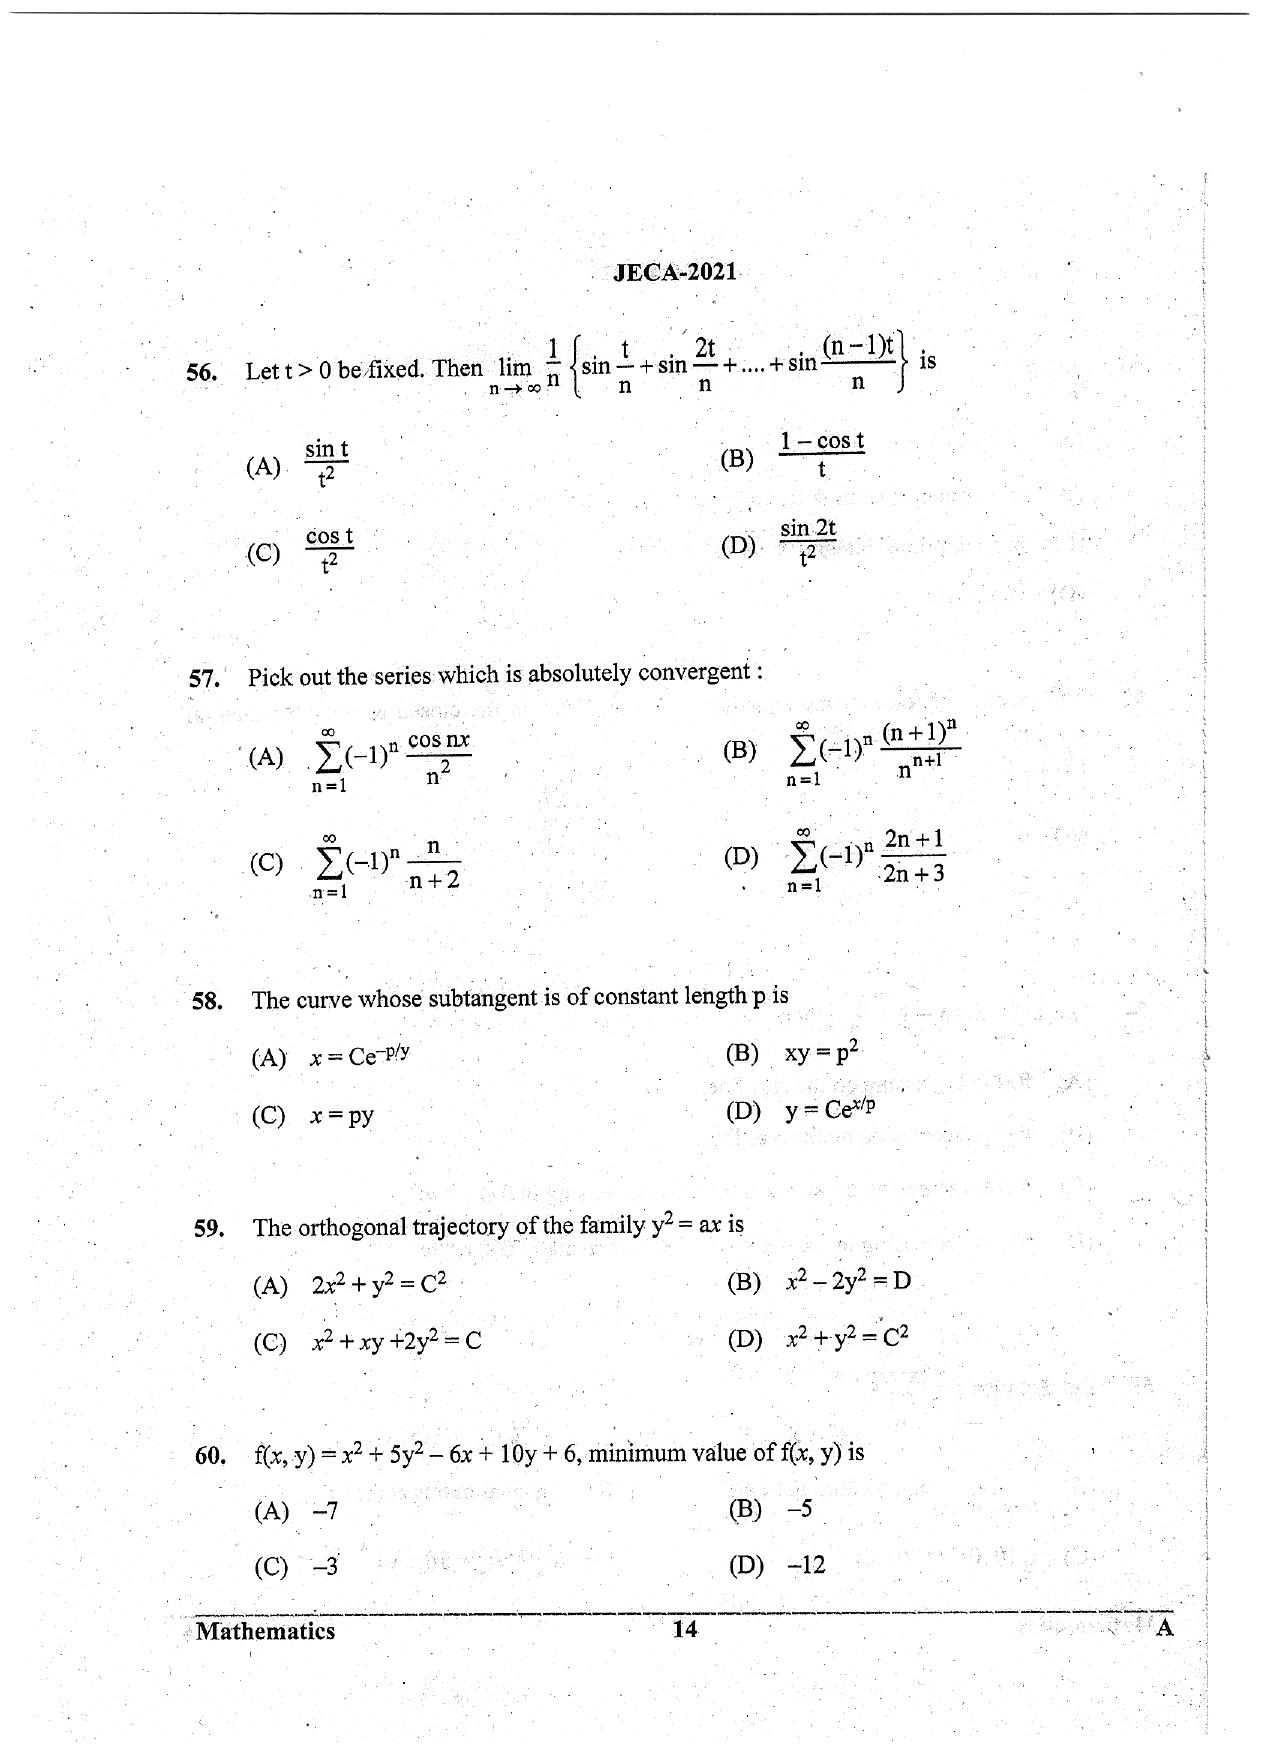 WB JECA 2021 Mathematics Question Paper - Page 14